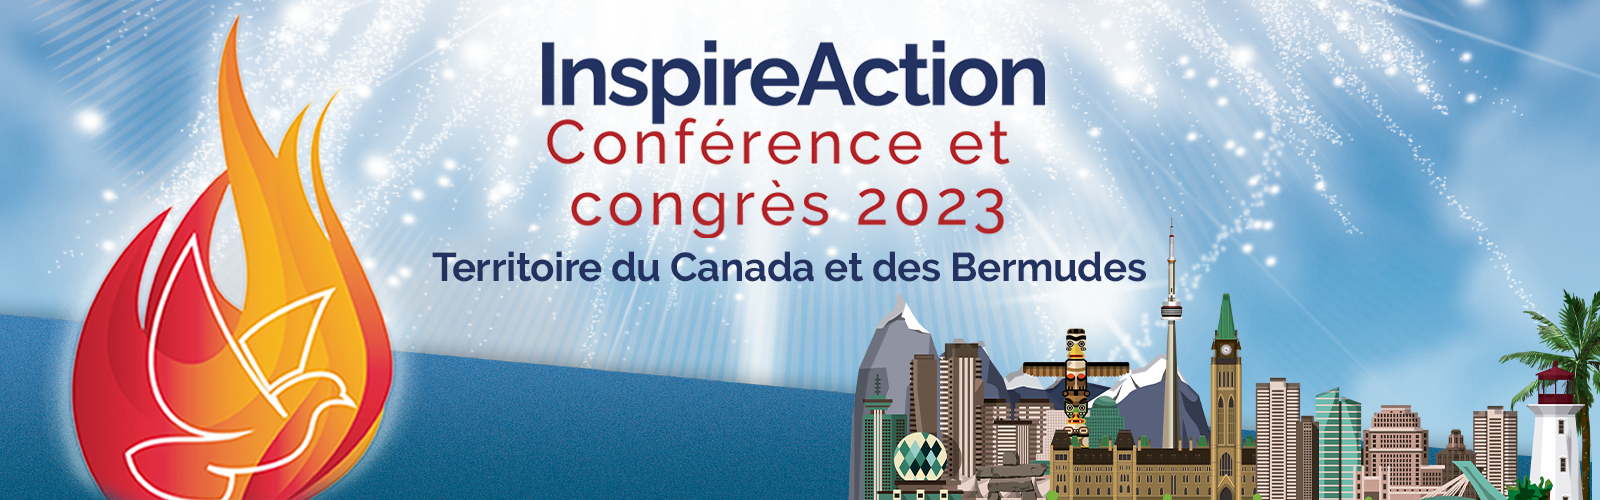 InspireAction 2023 Territoire du Canada et des Bermudes